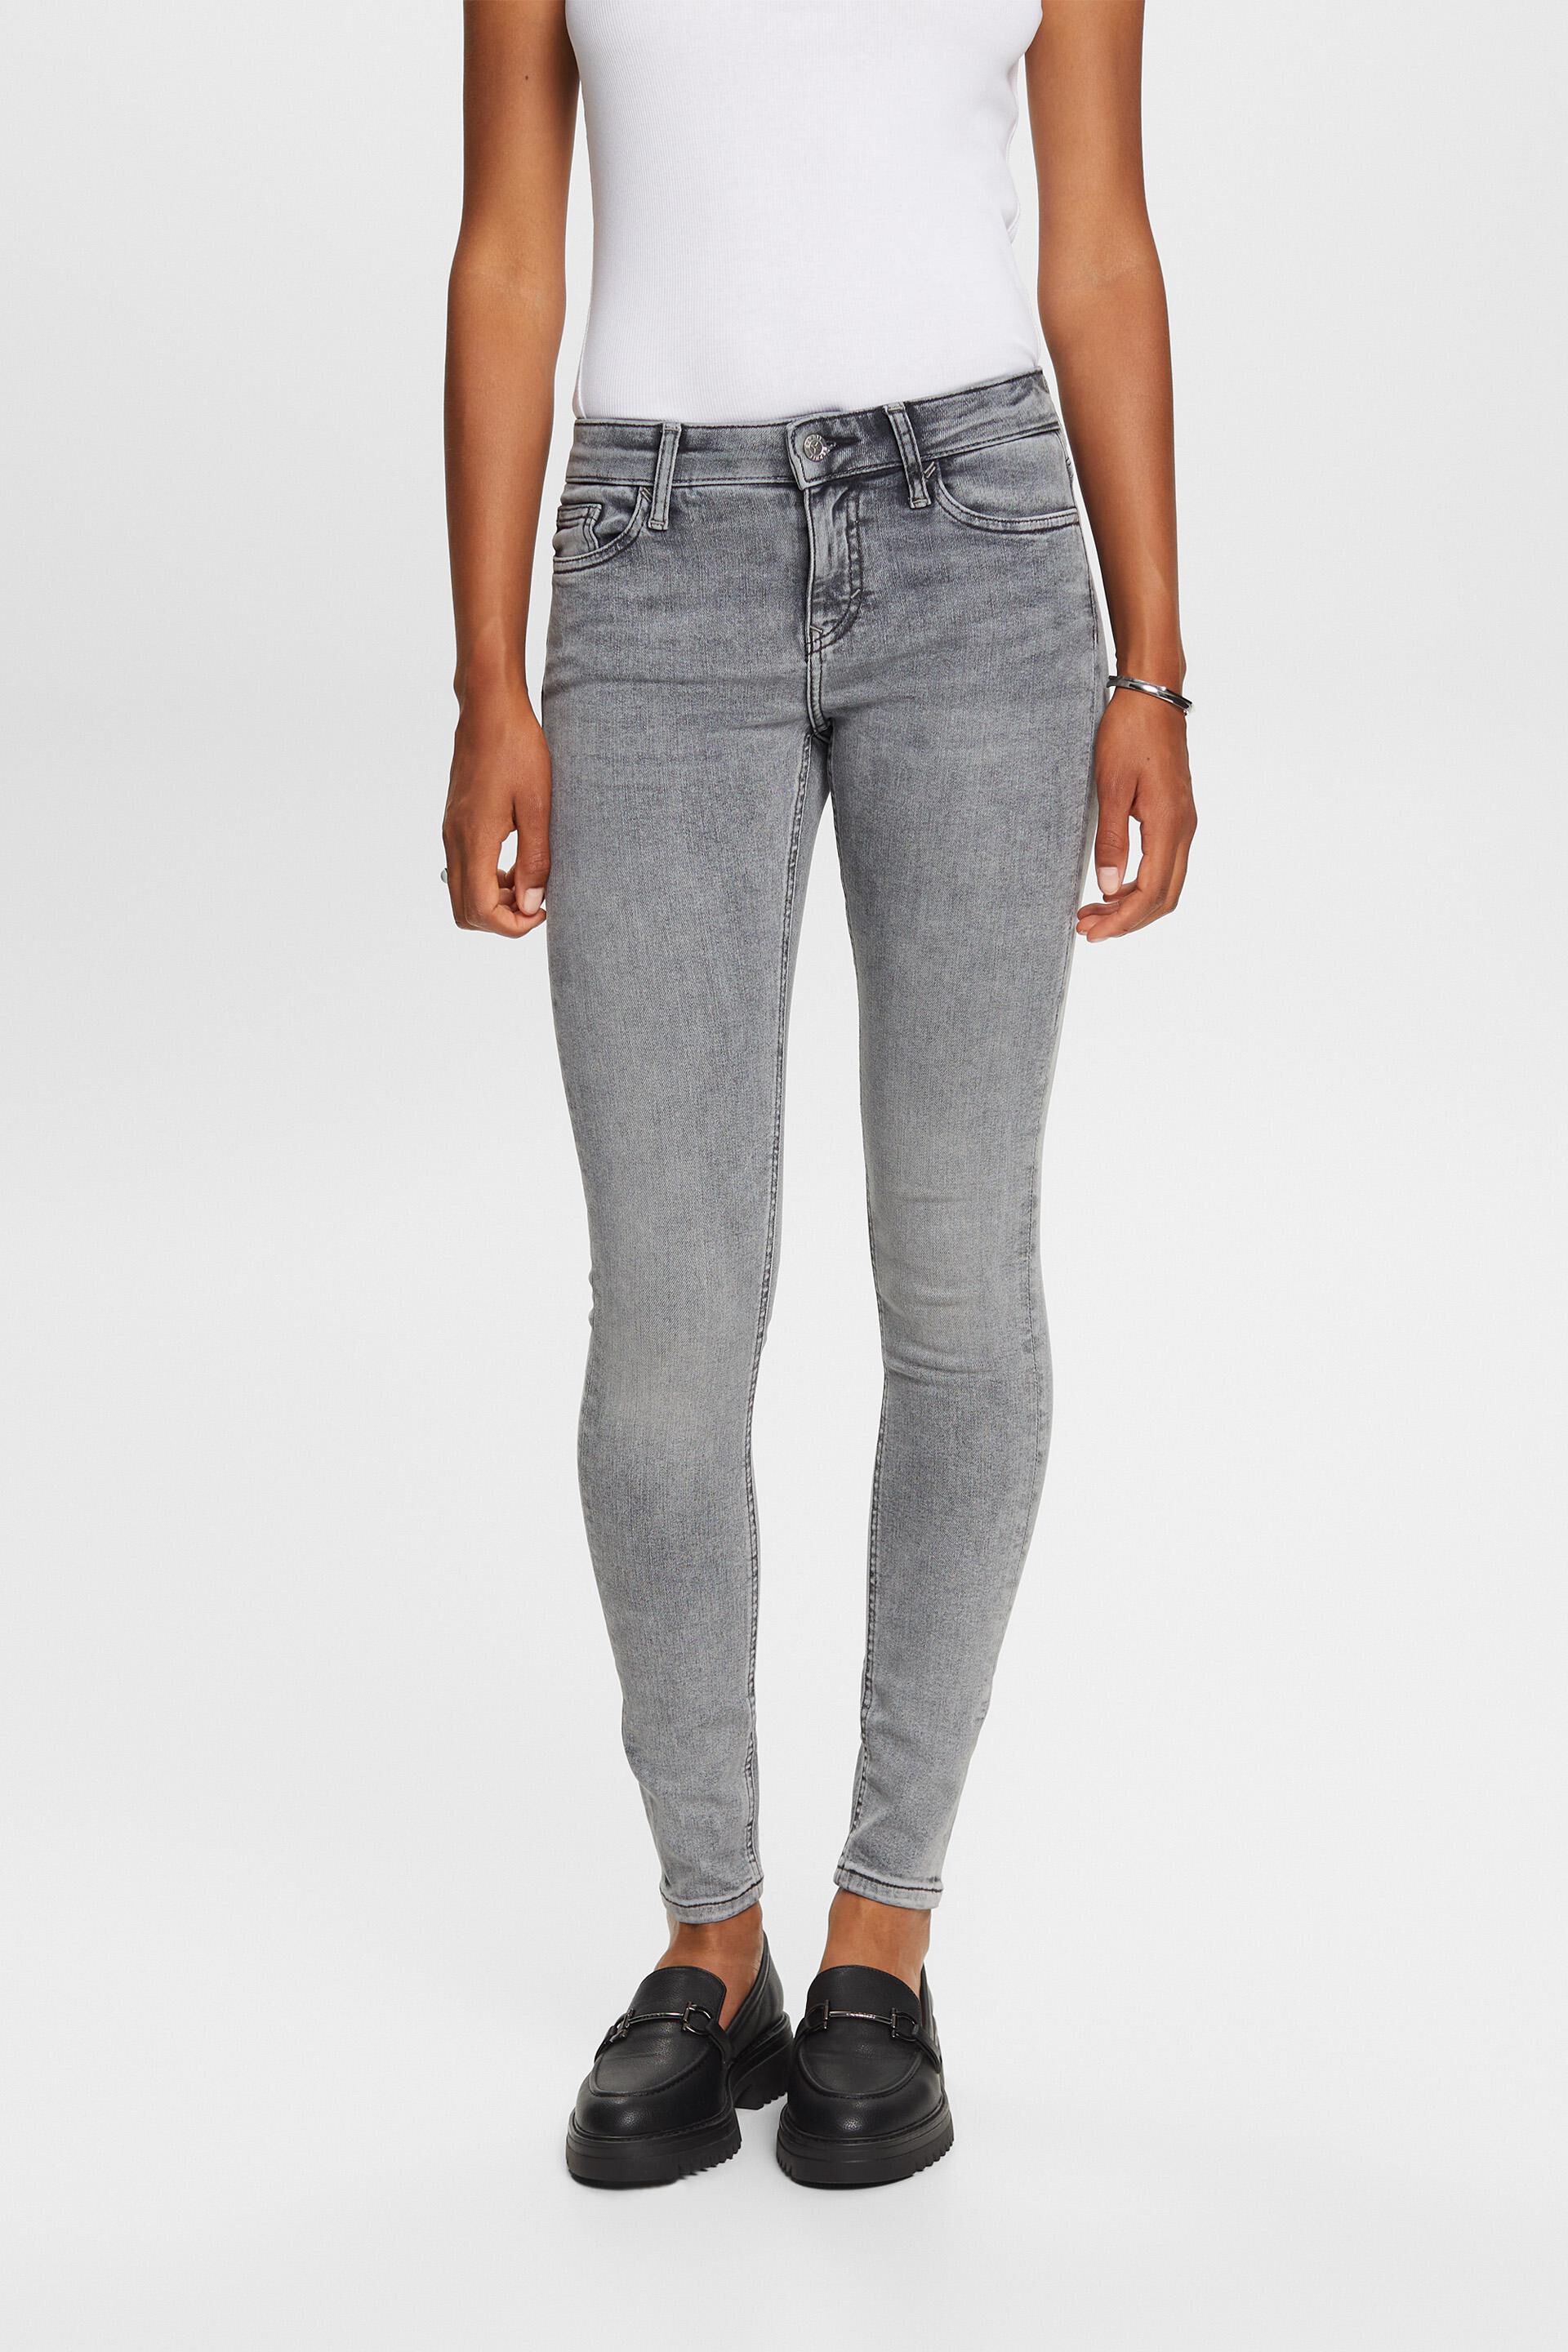 Esprit Skinny Mid-Rise Jeans